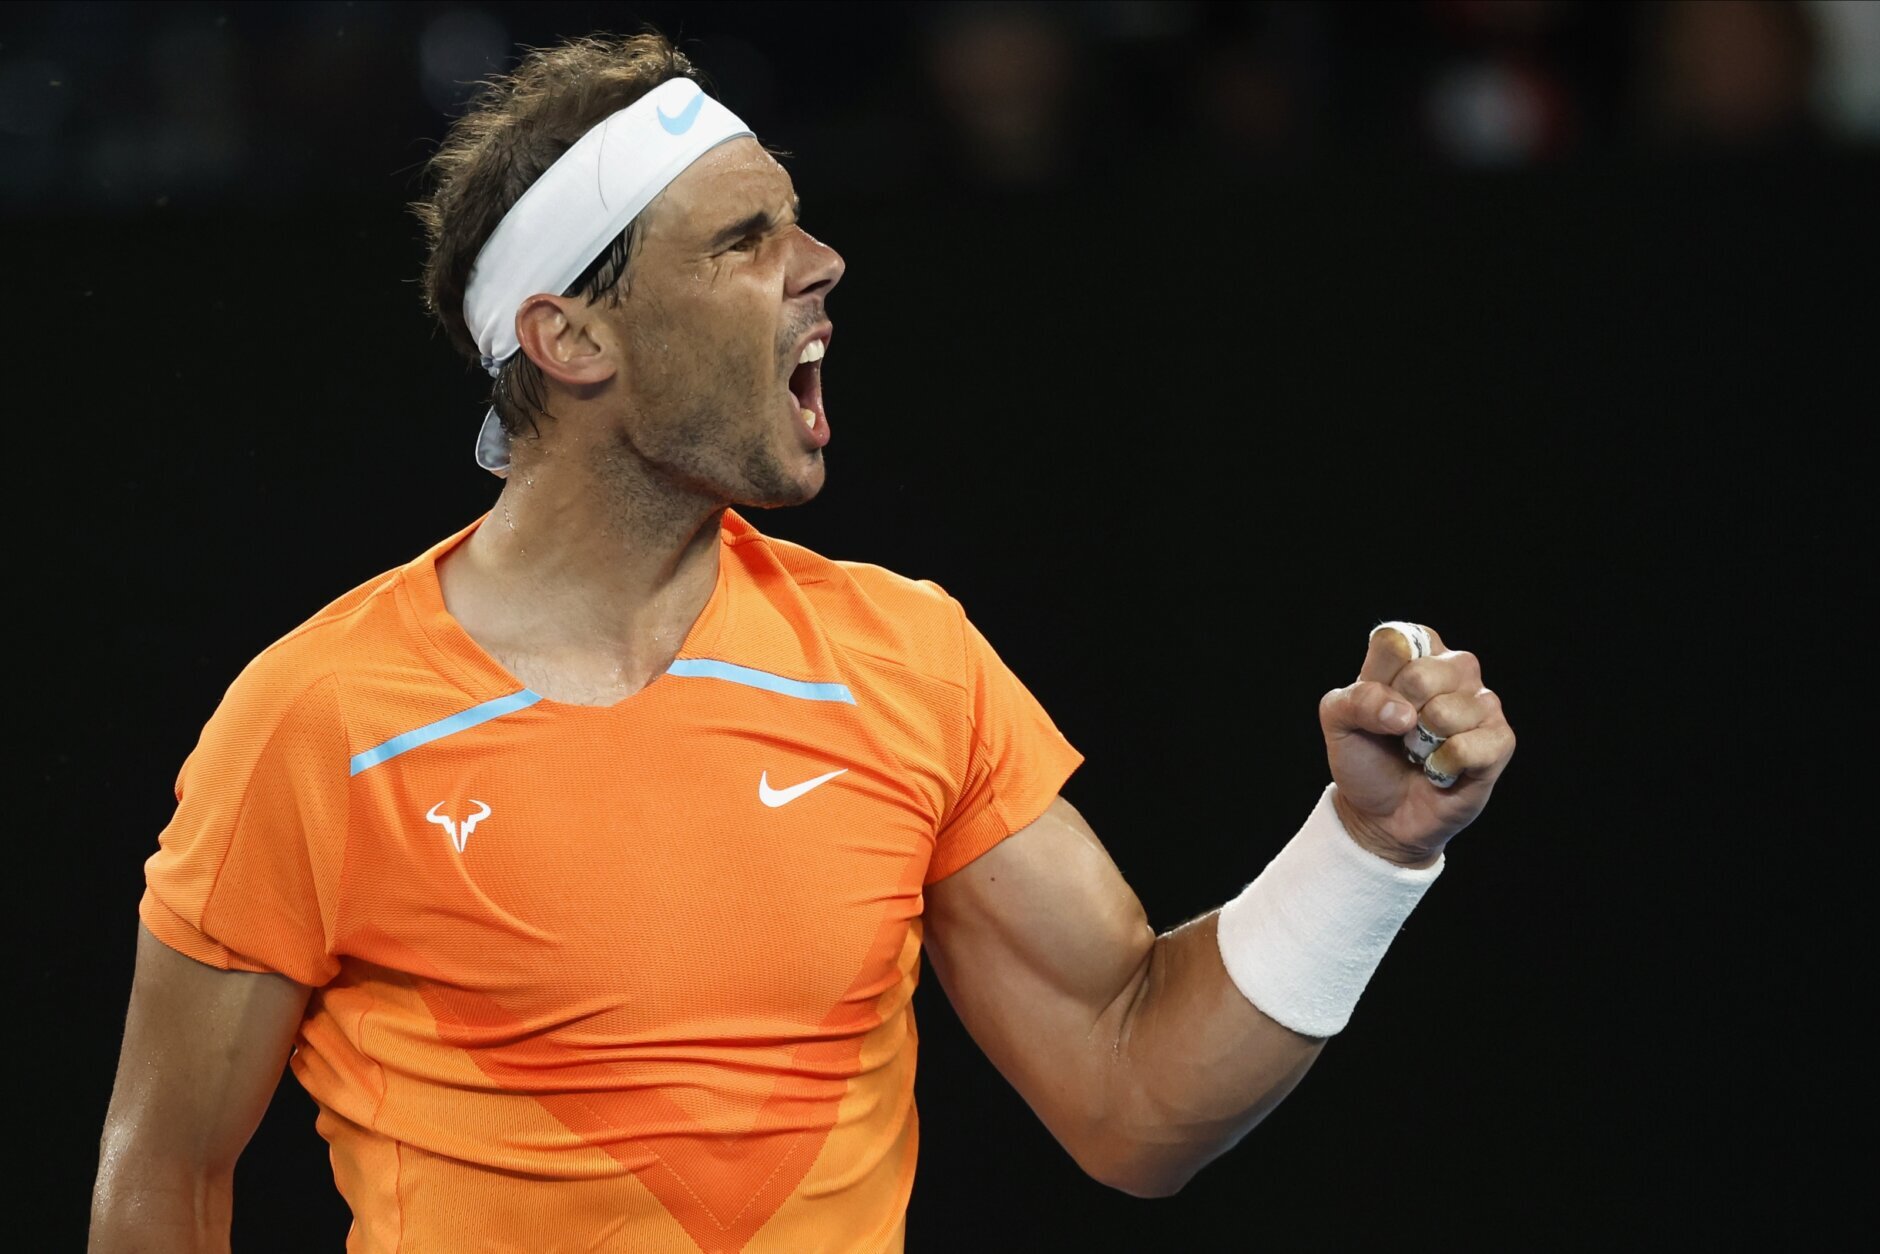 Hampered by bad hip, Rafael Nadal loses at Australian Open